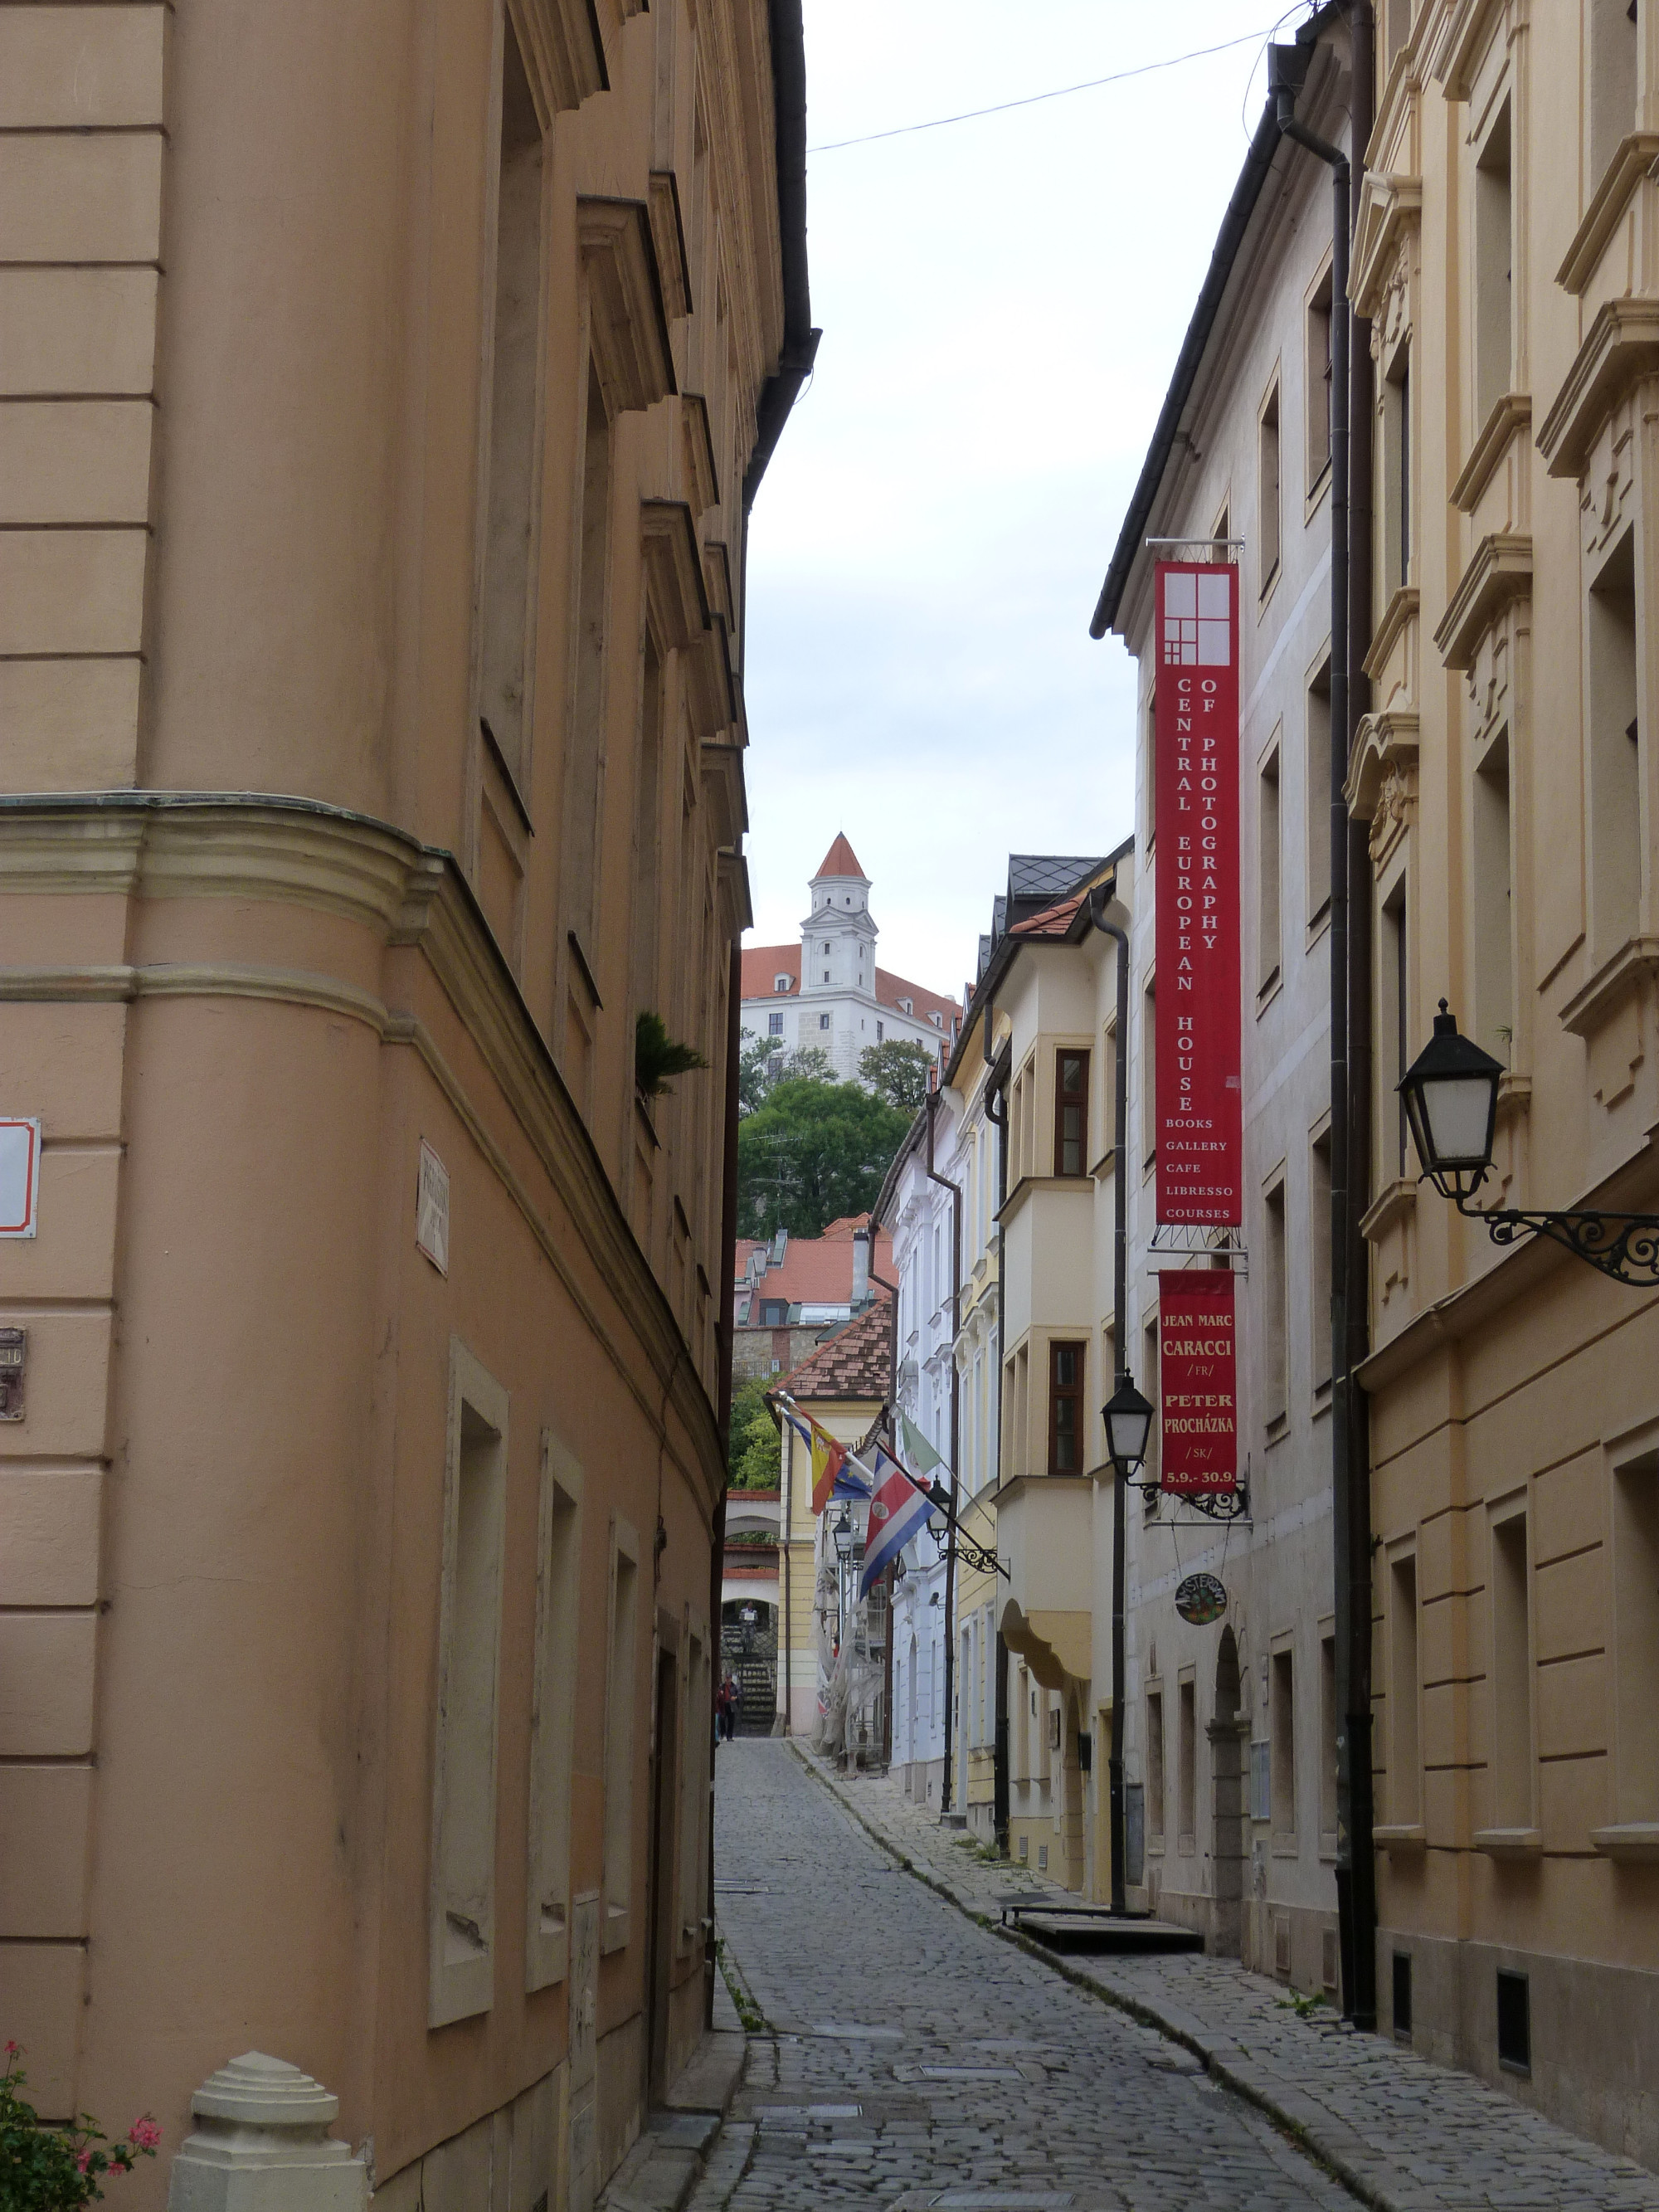 Castle peeping through the narrow streets